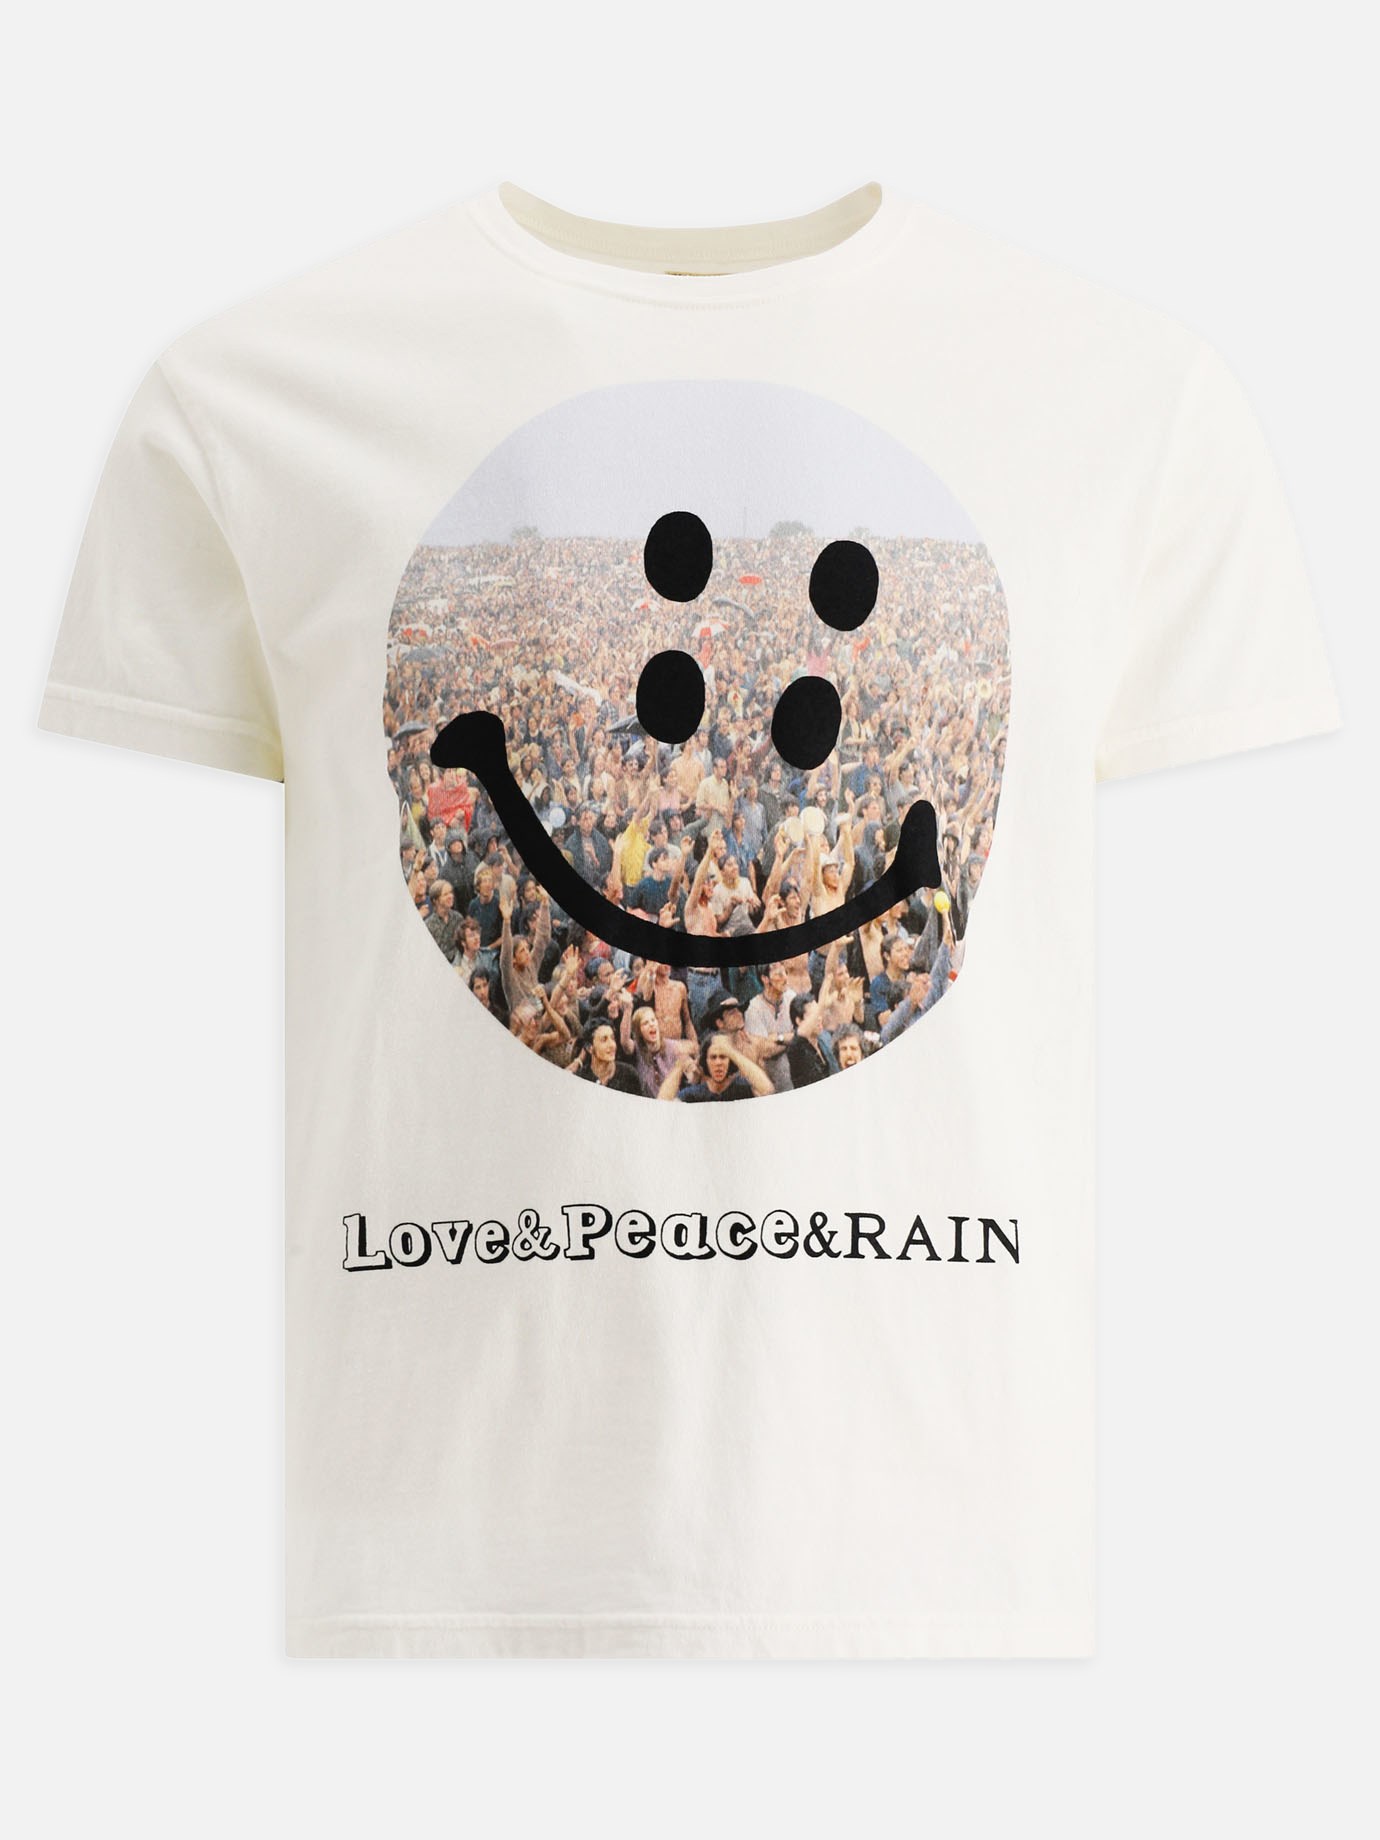  Rainbovy  t-shirt by Kapital